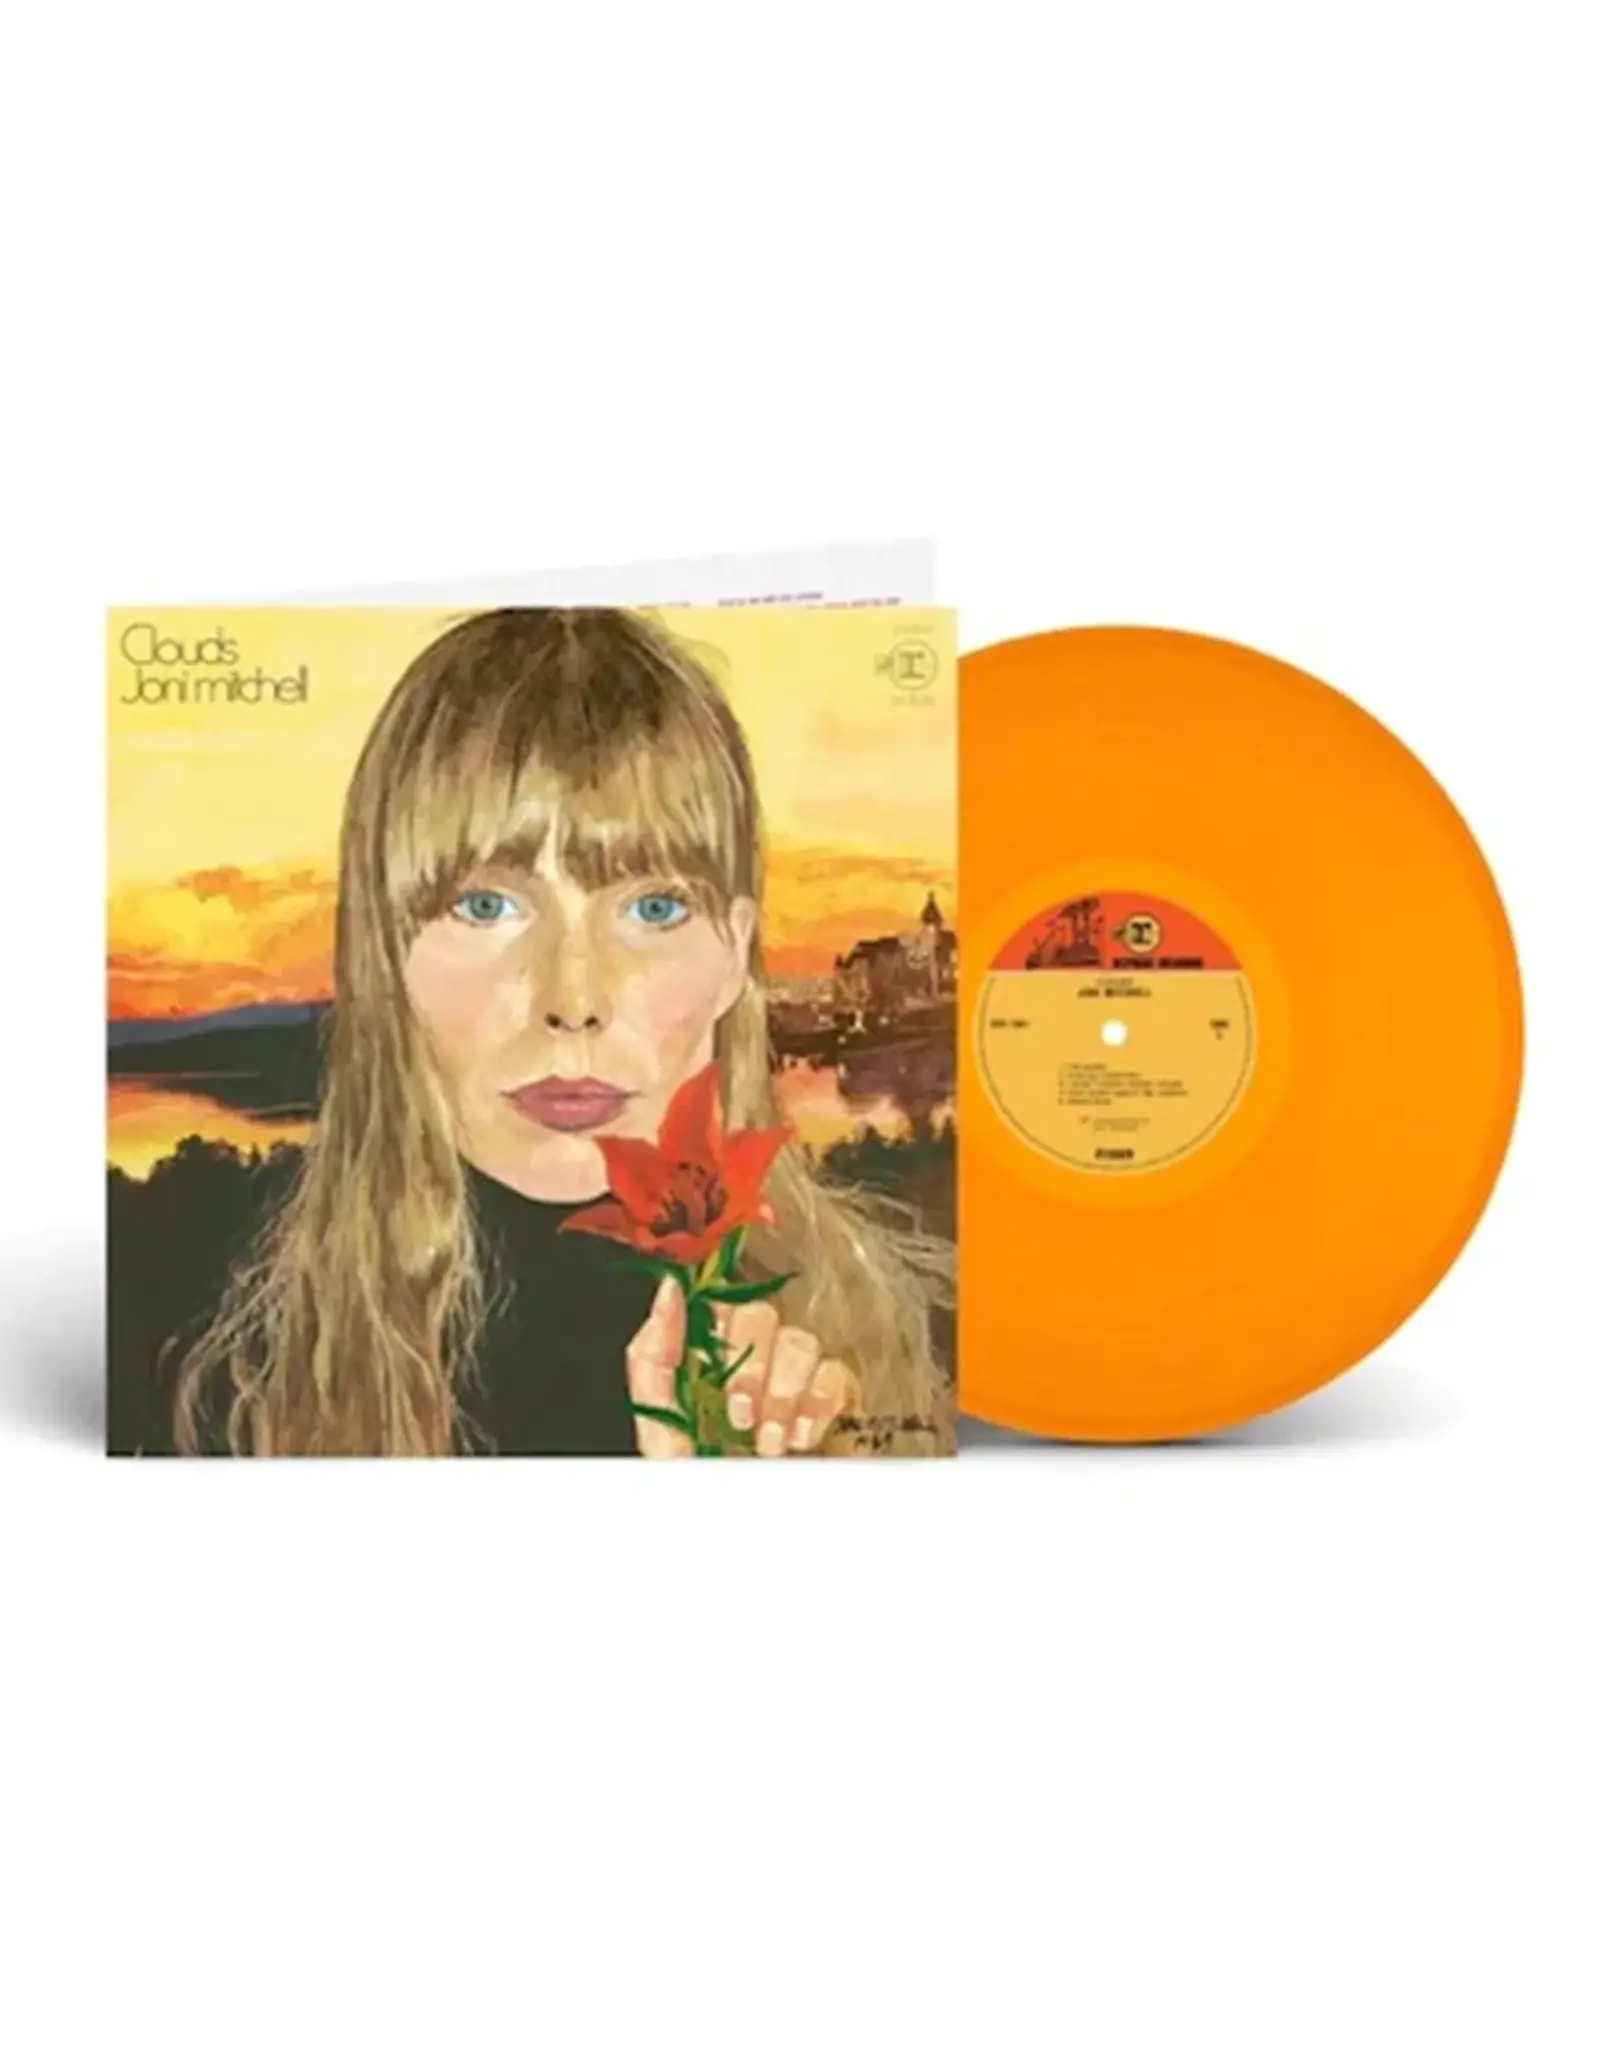 Joni Mitchell - Clouds (Exclusive Orange Vinyl)